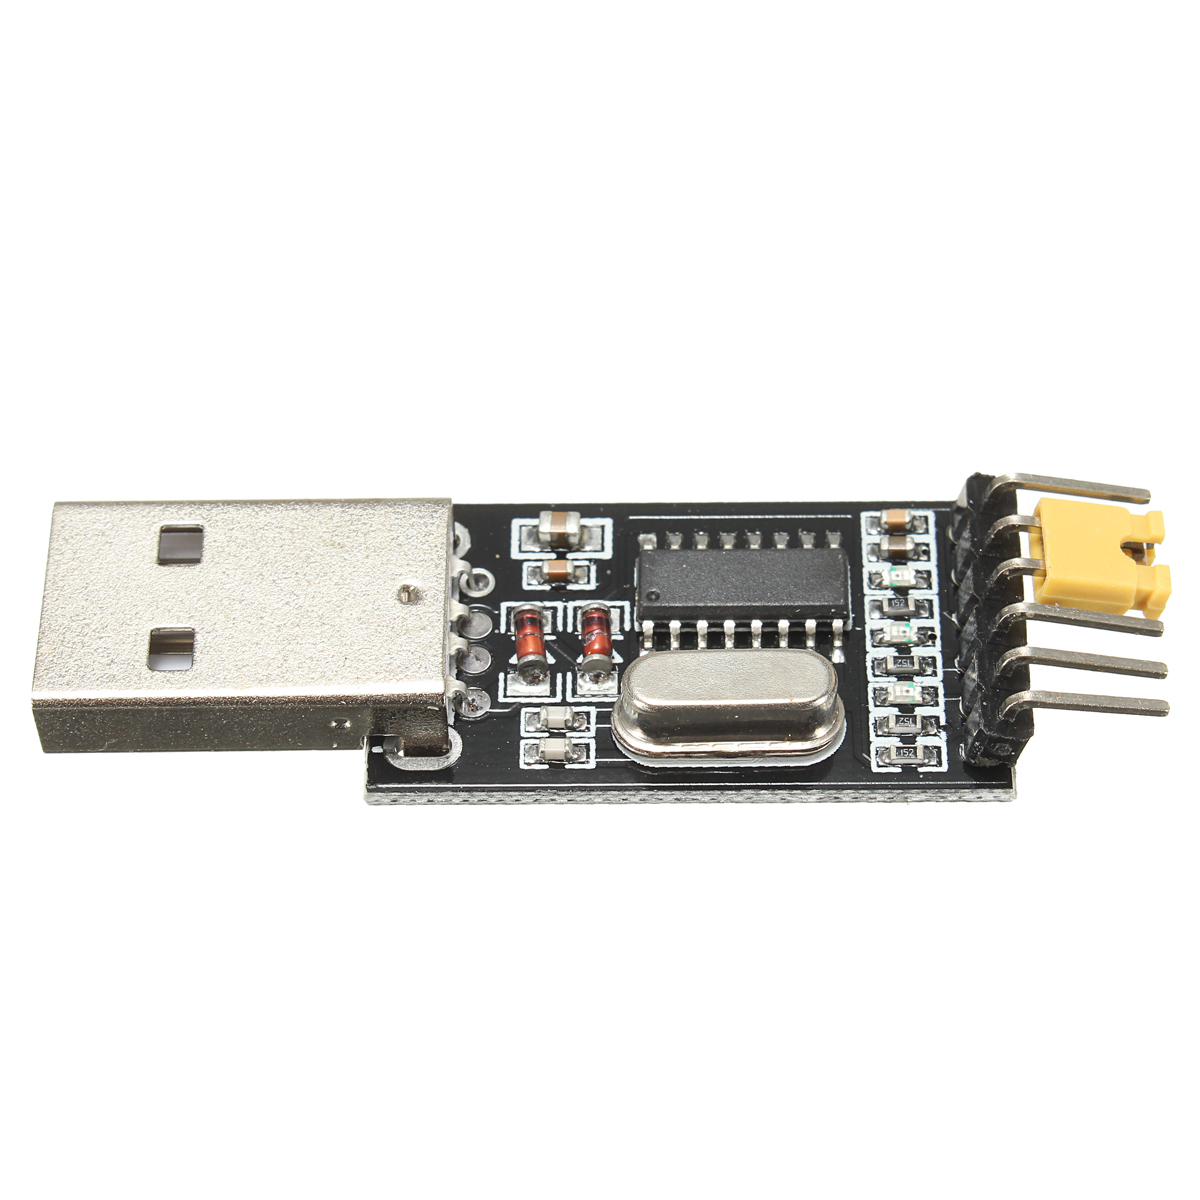 10pcs-33V-5V-USB-to-TTL-Converter-CH340G-UART-Serial-Adapter-Module-STC-1314967-4